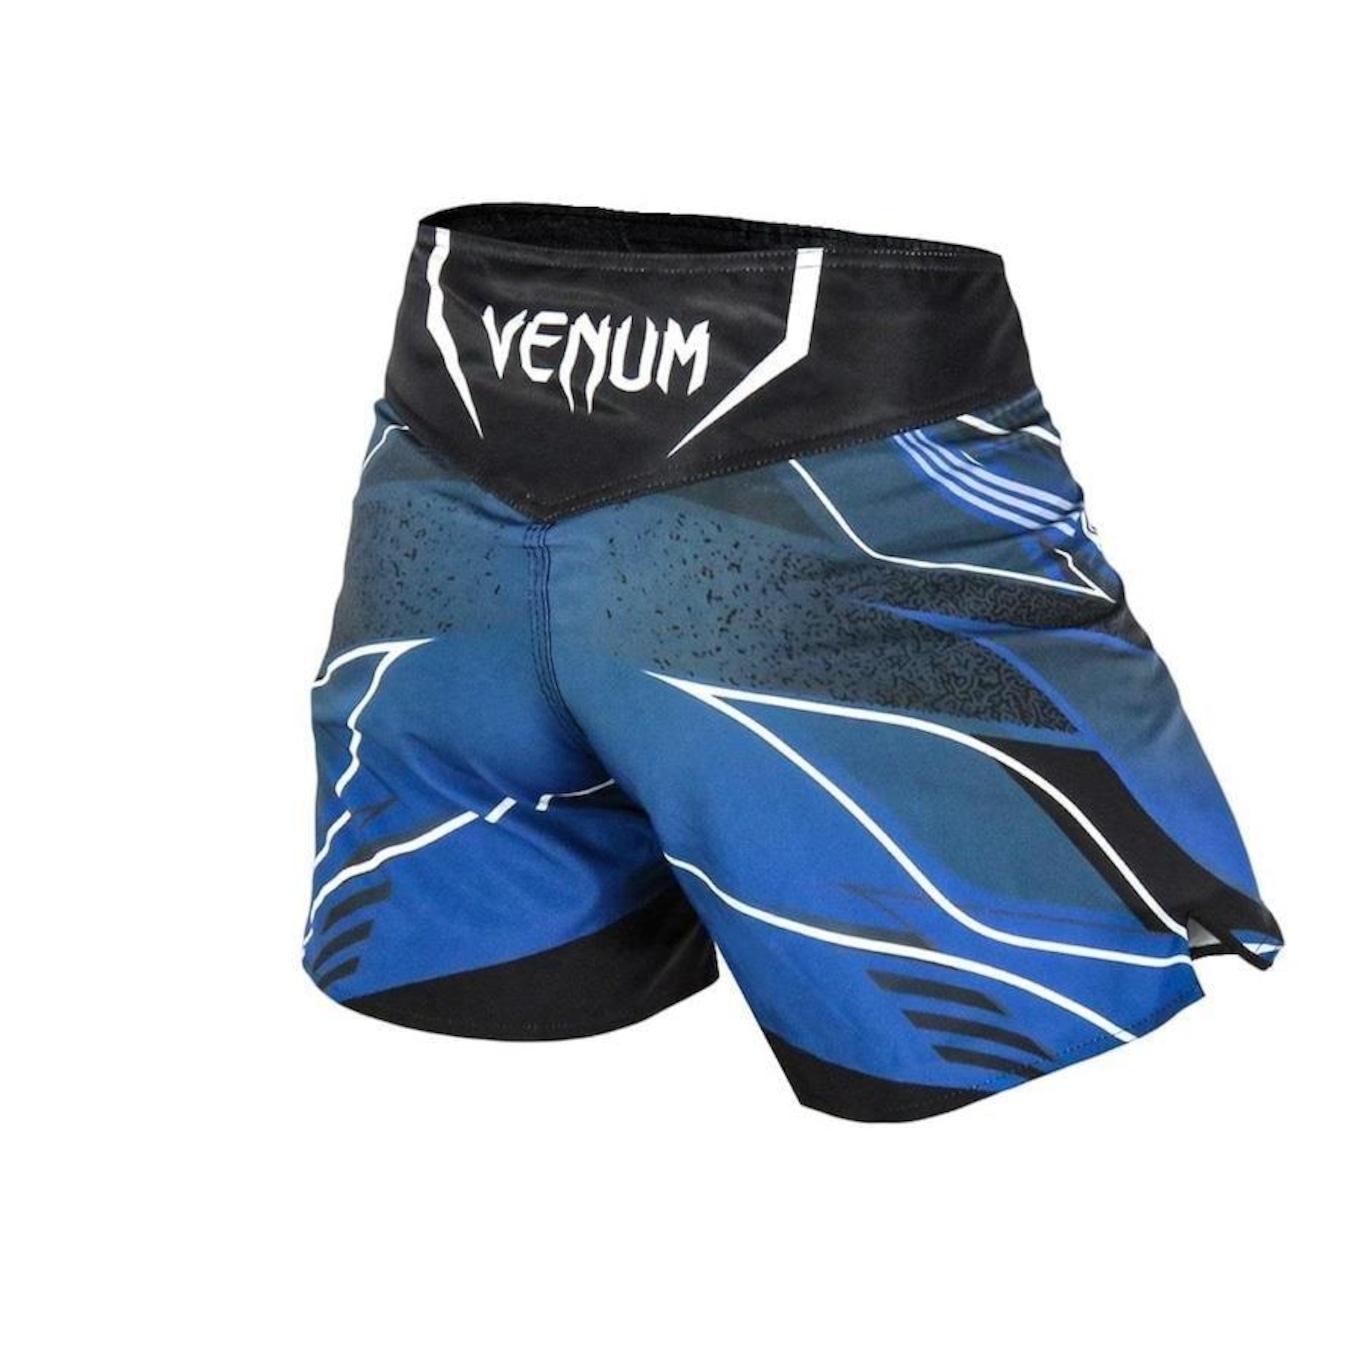 Shorts Venum Oficial Fit Ufc Fight Night - Masculino